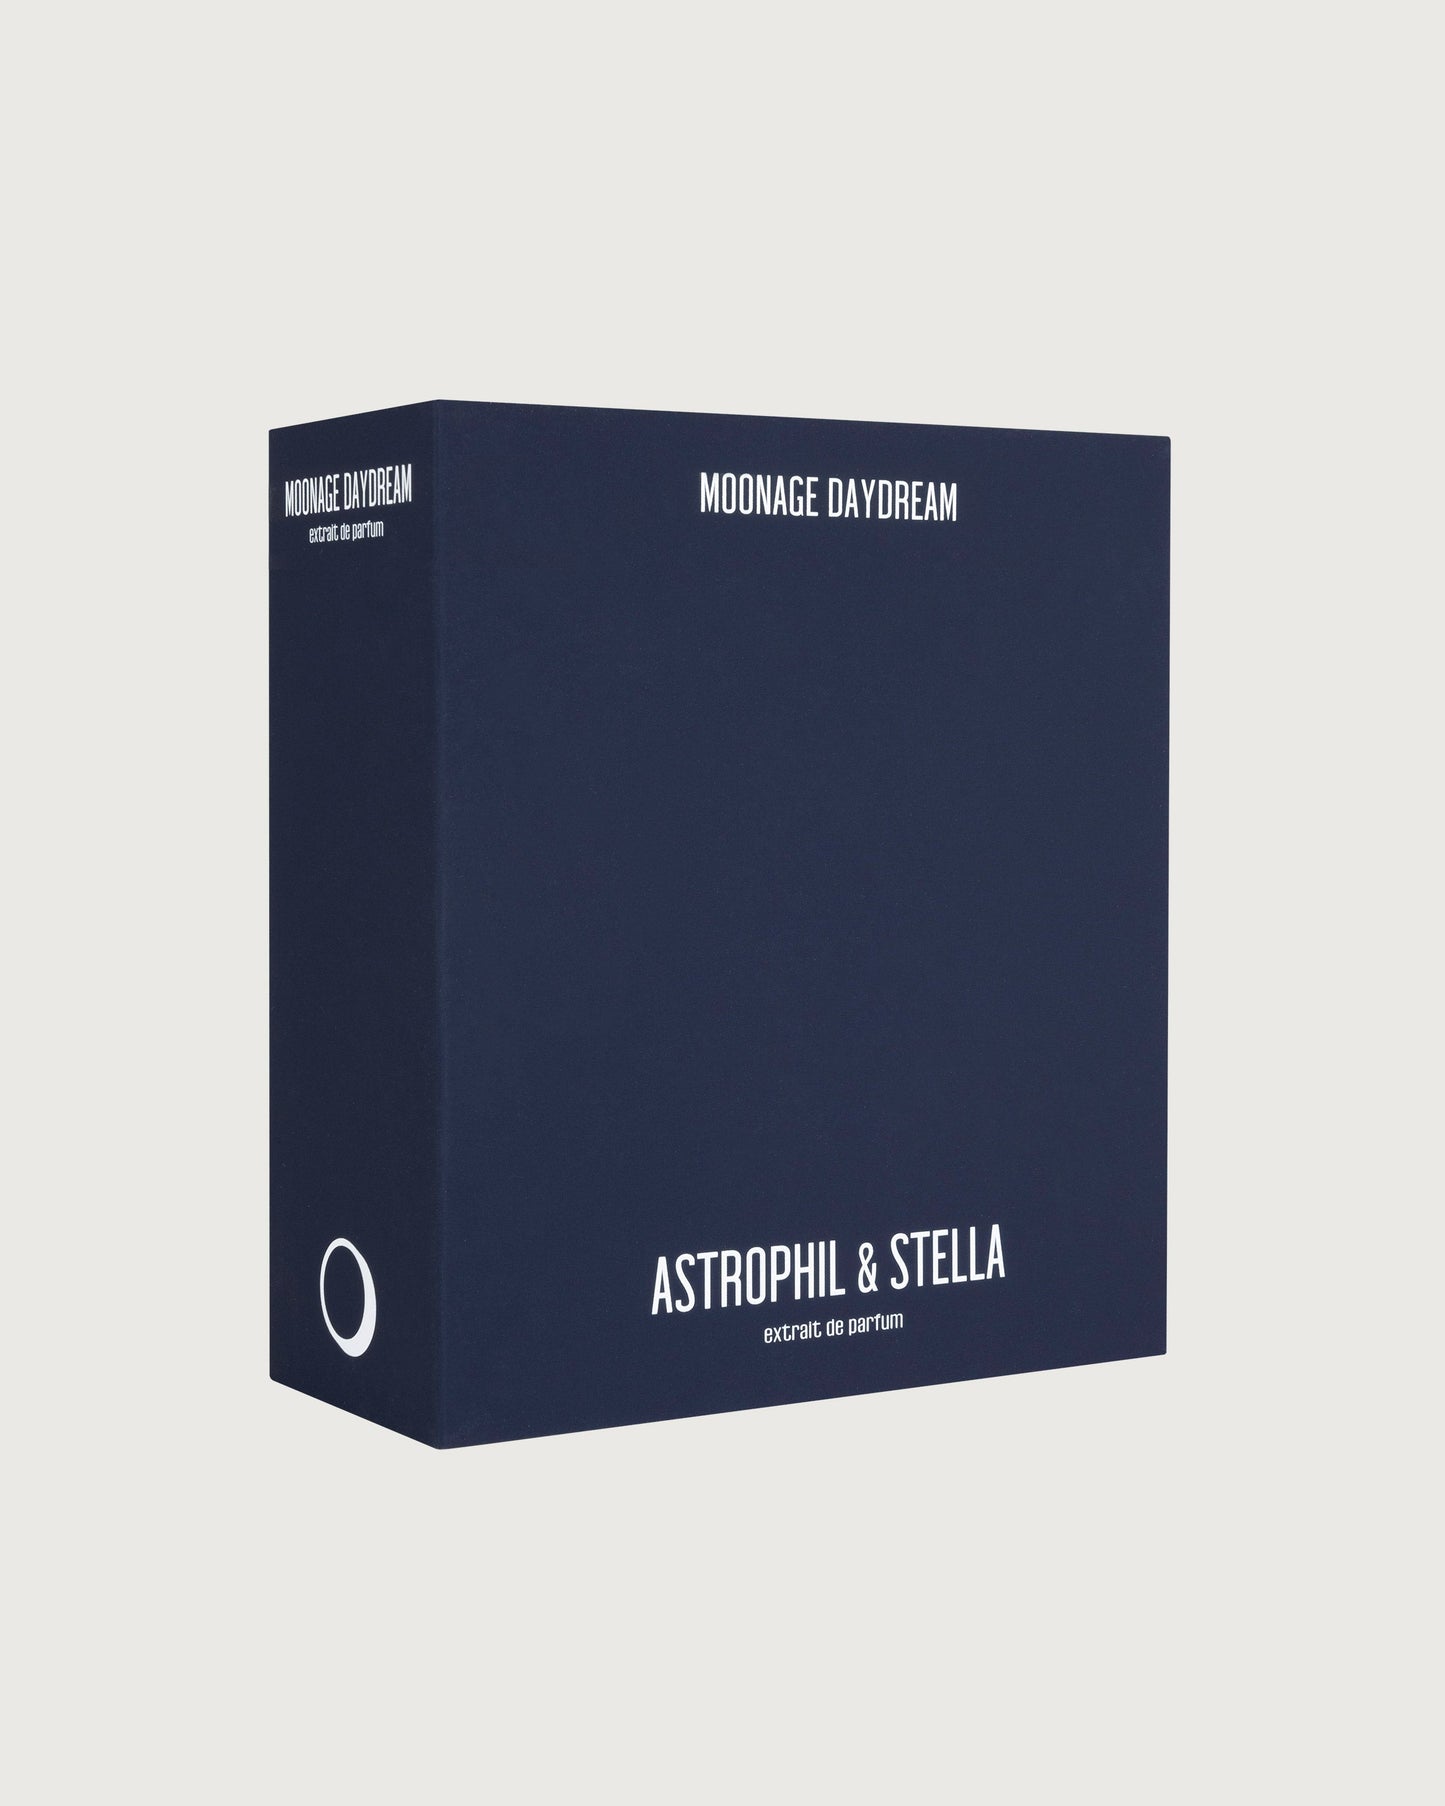 Moonage Daydream Astrophil & Stella Extrait de Parfum Sample2ml